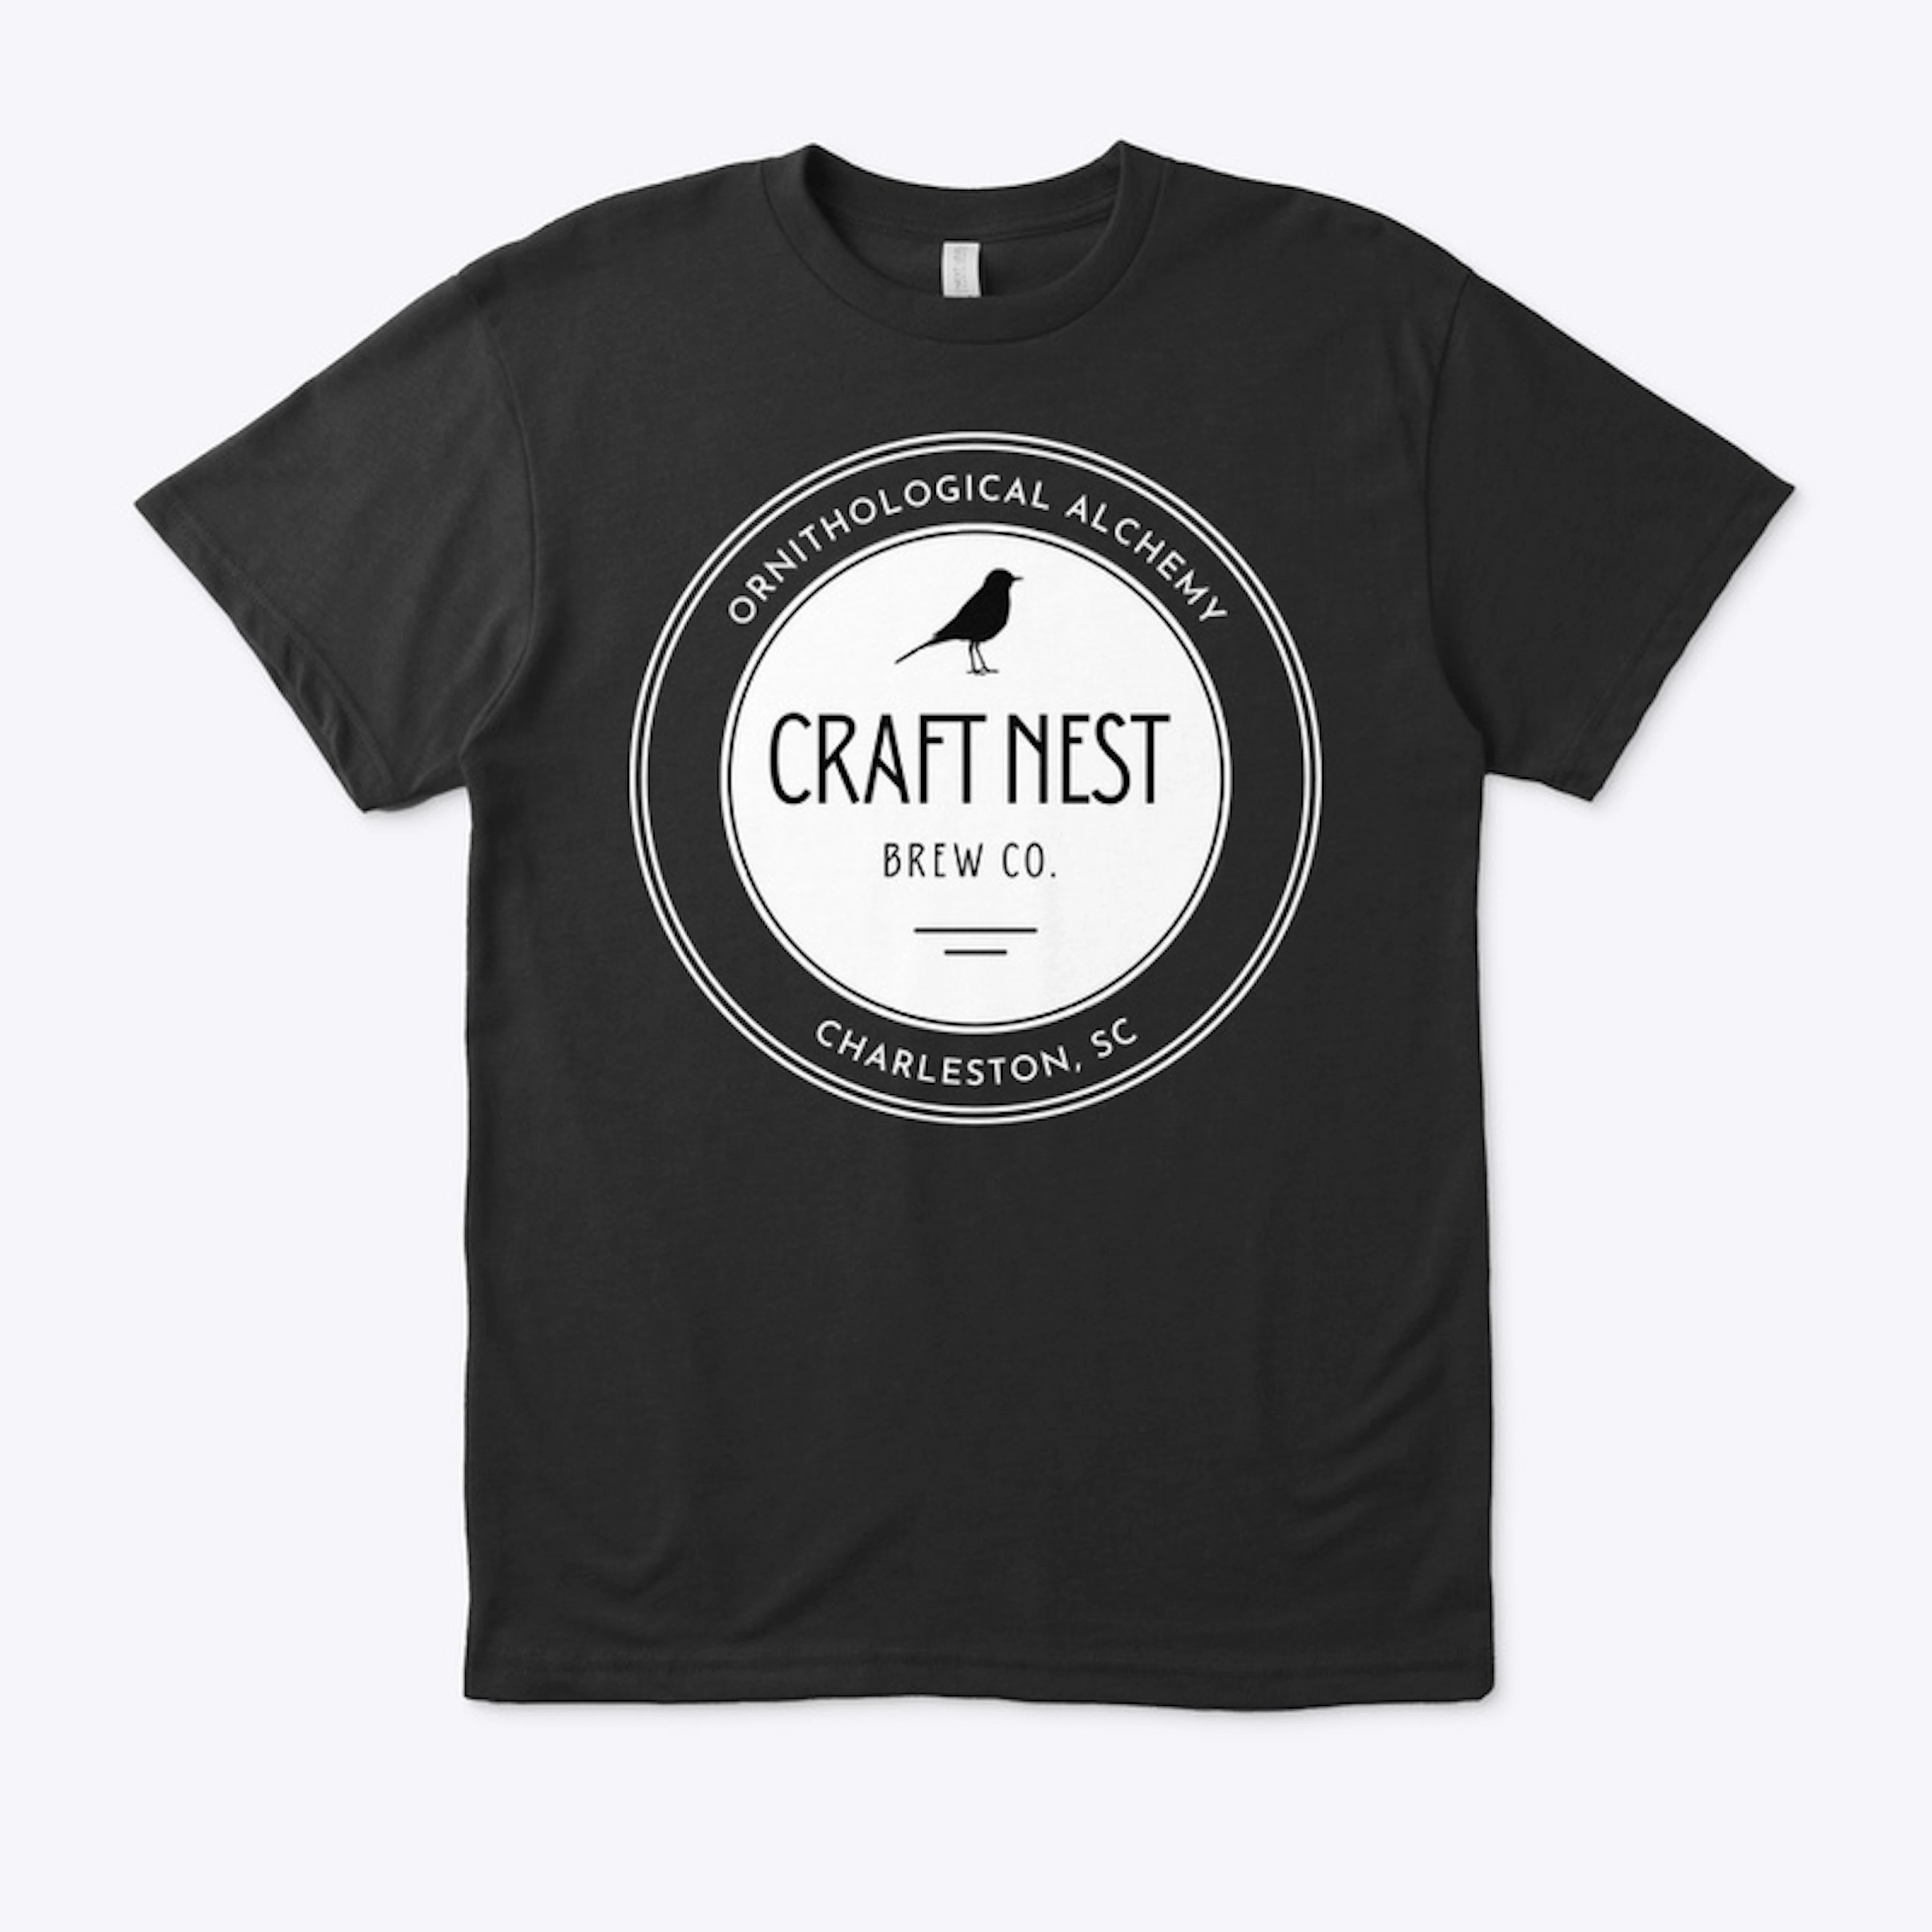 Craft Nest Brew Co.